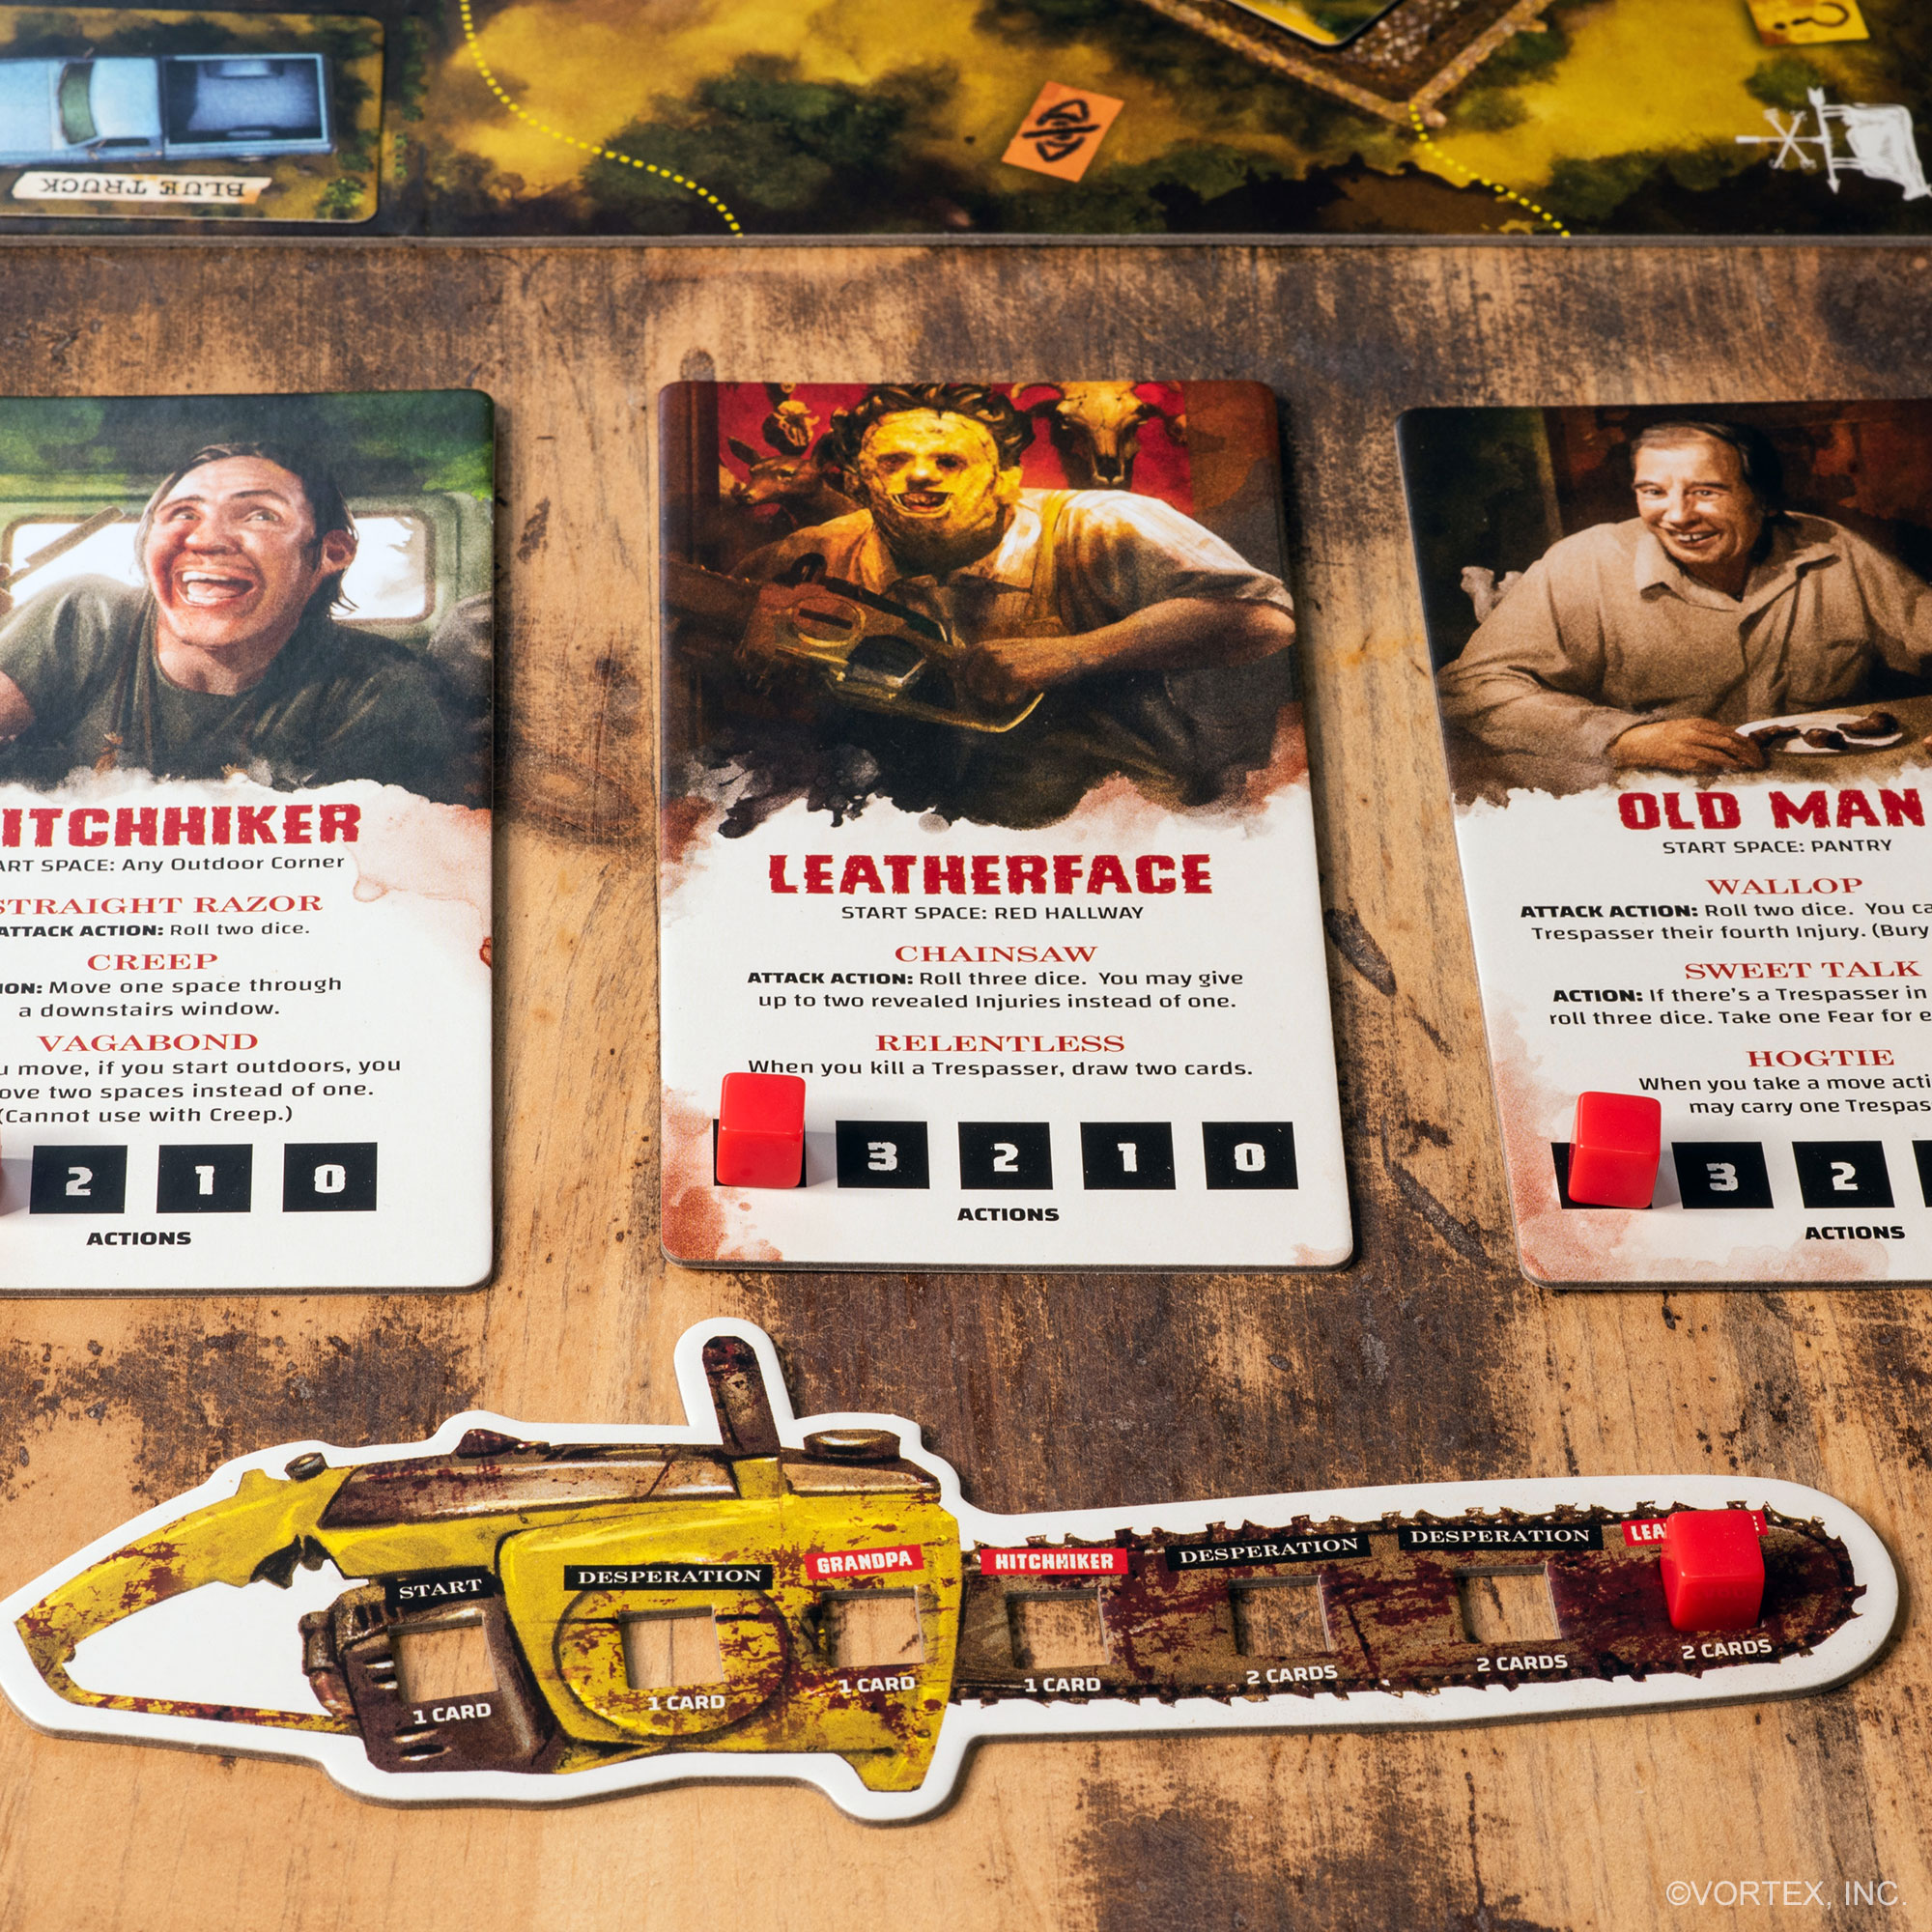 The Texas Chainsaw Massacre Board Game